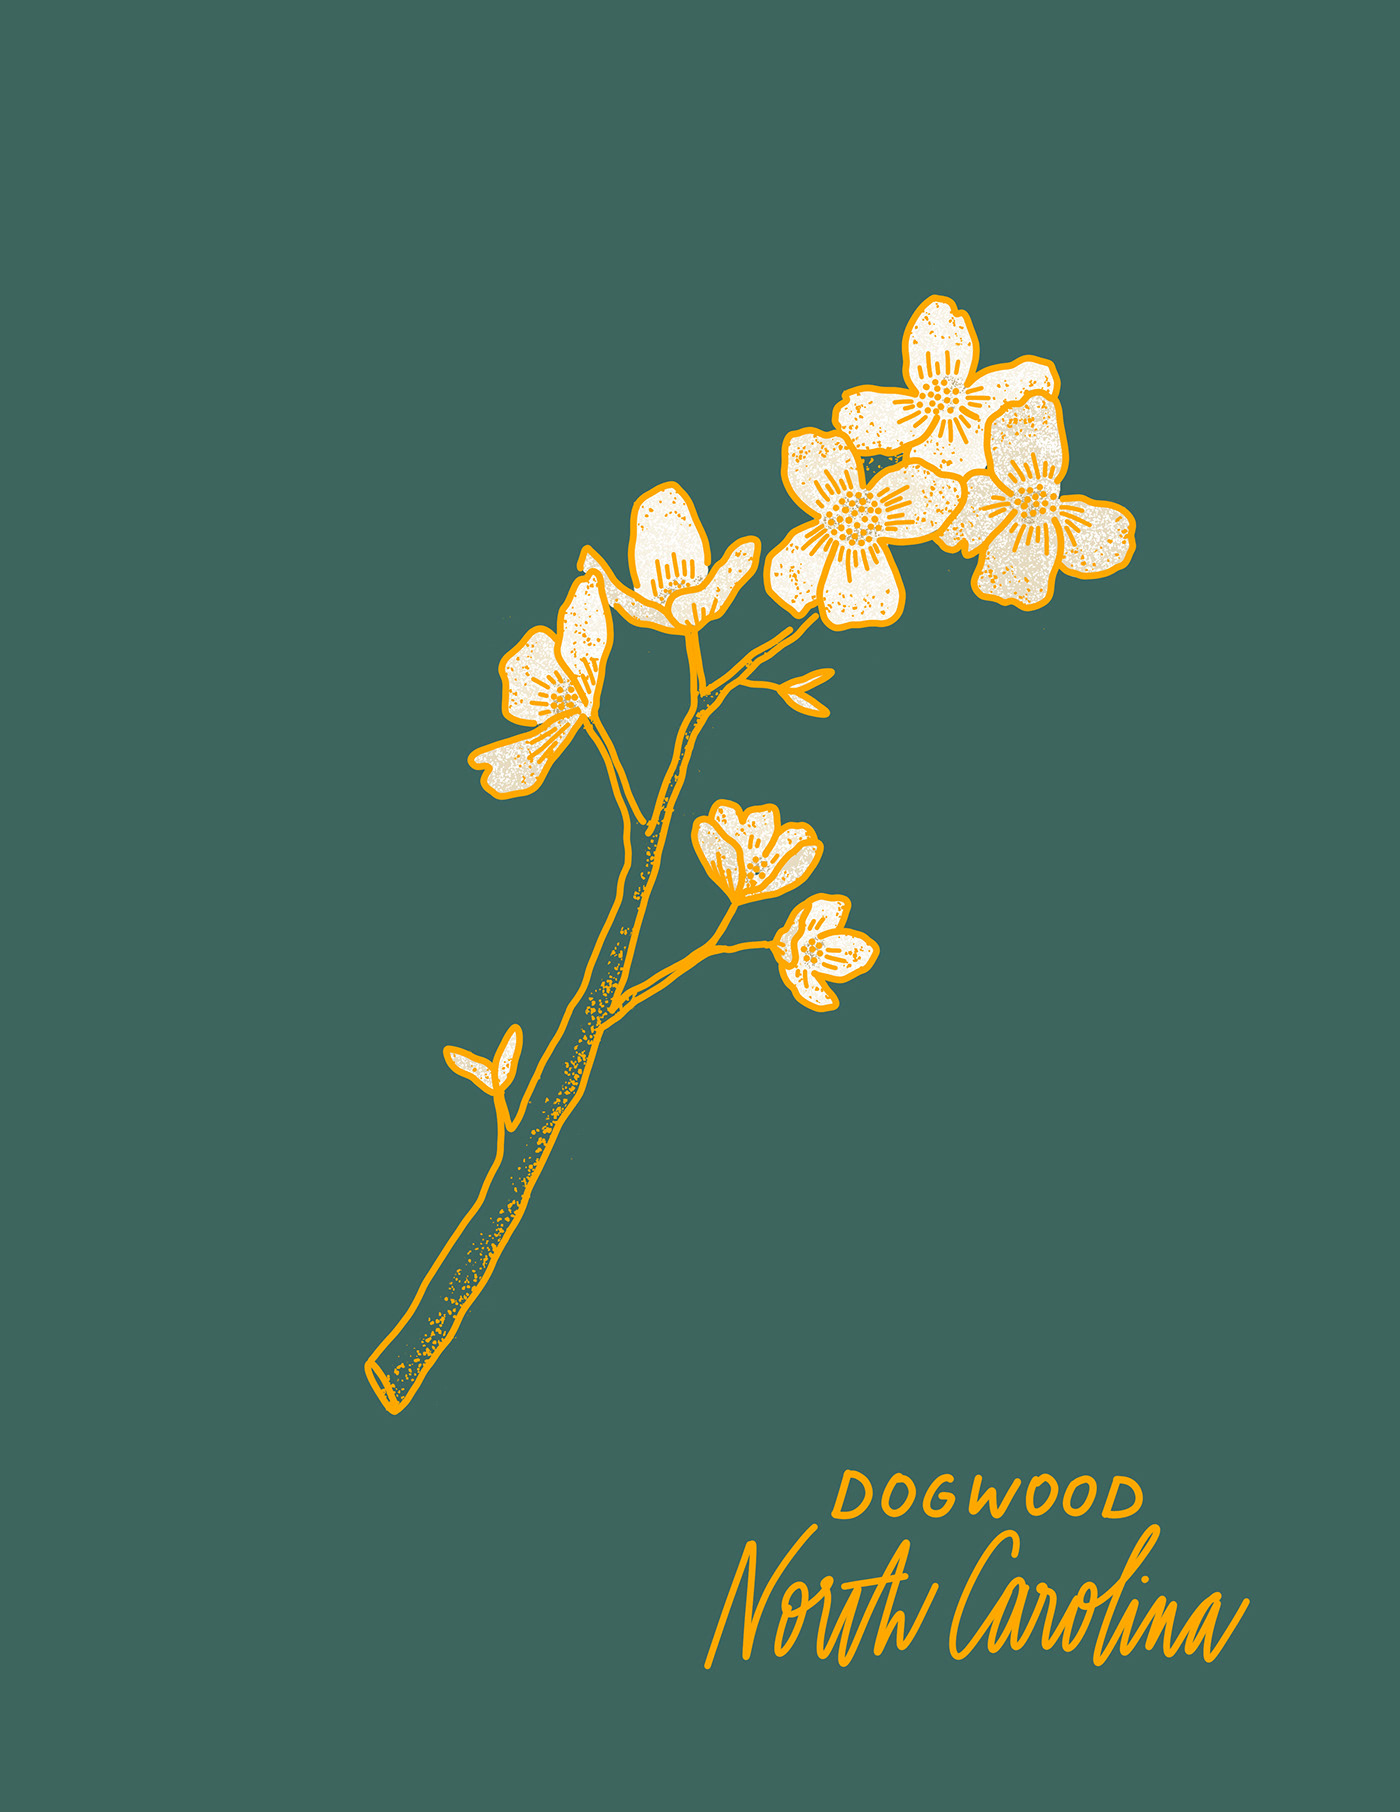 Illustrated Dogwood Flowers
